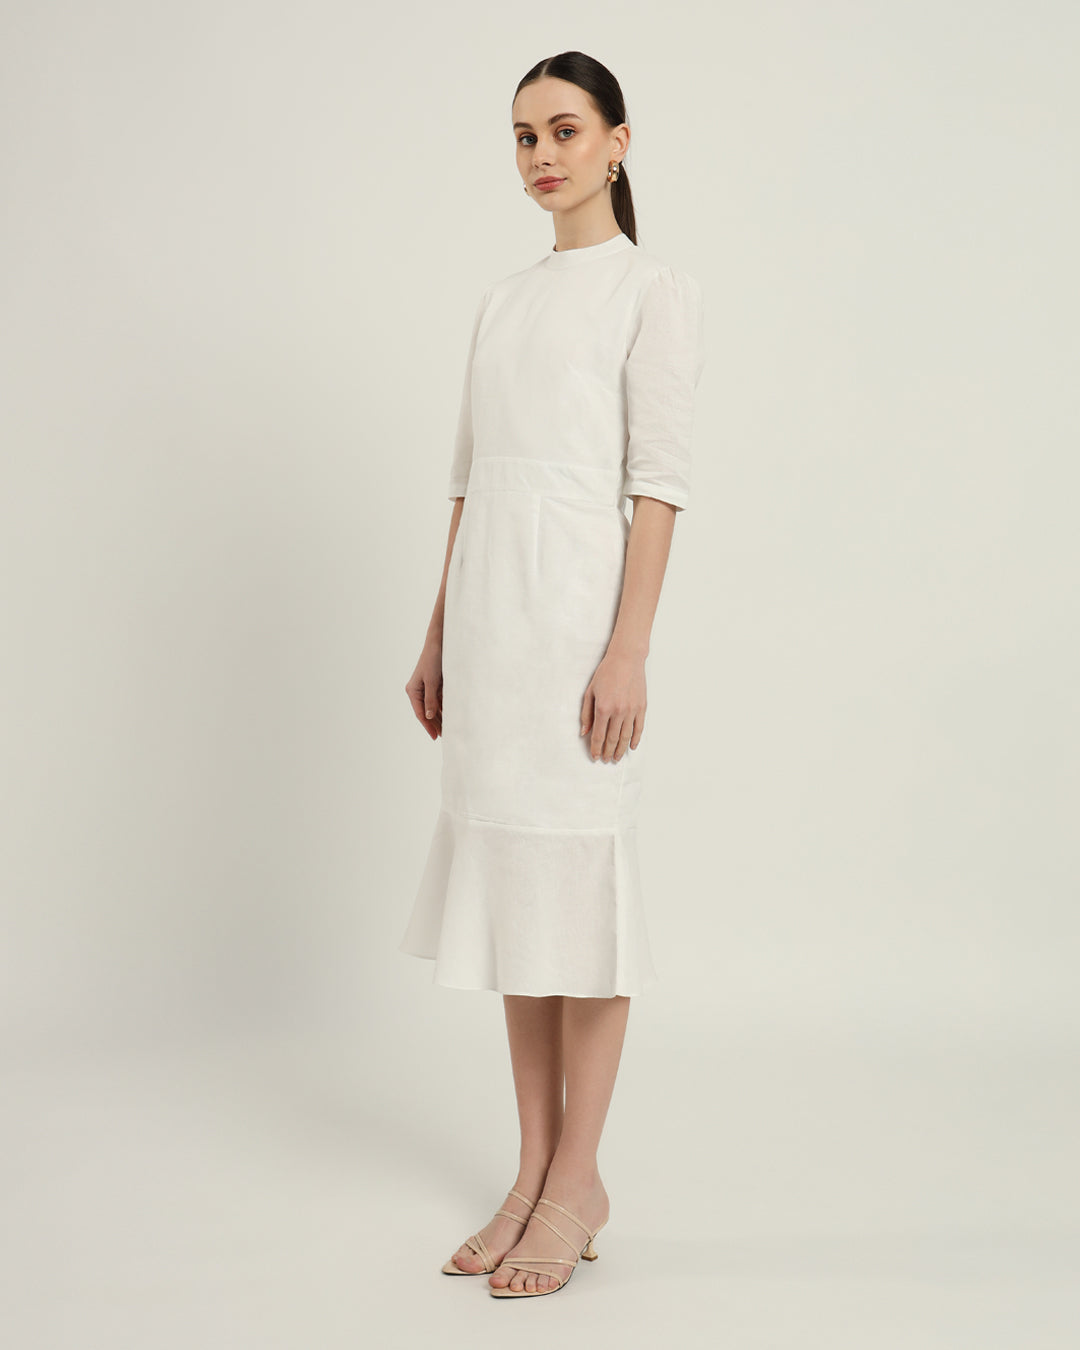 The Charlotte Daisy White Linen Dress